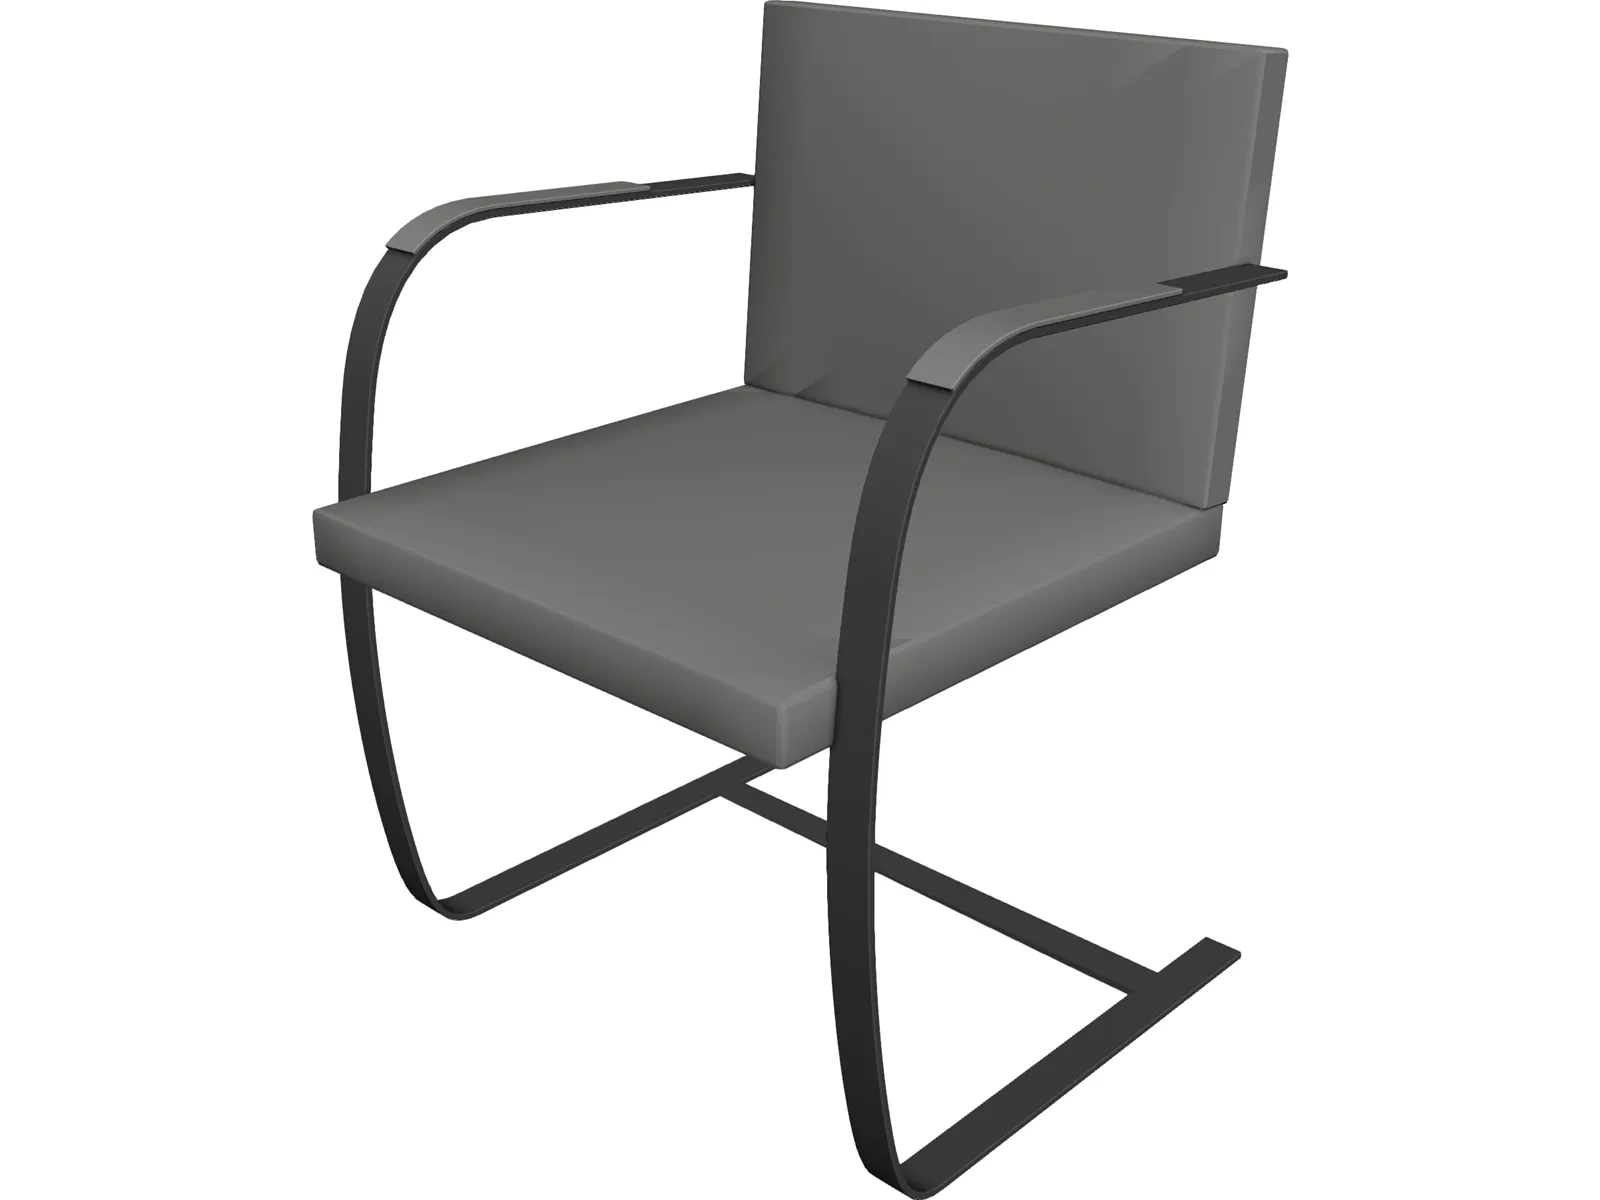 Chair Brno Modern 3D Model